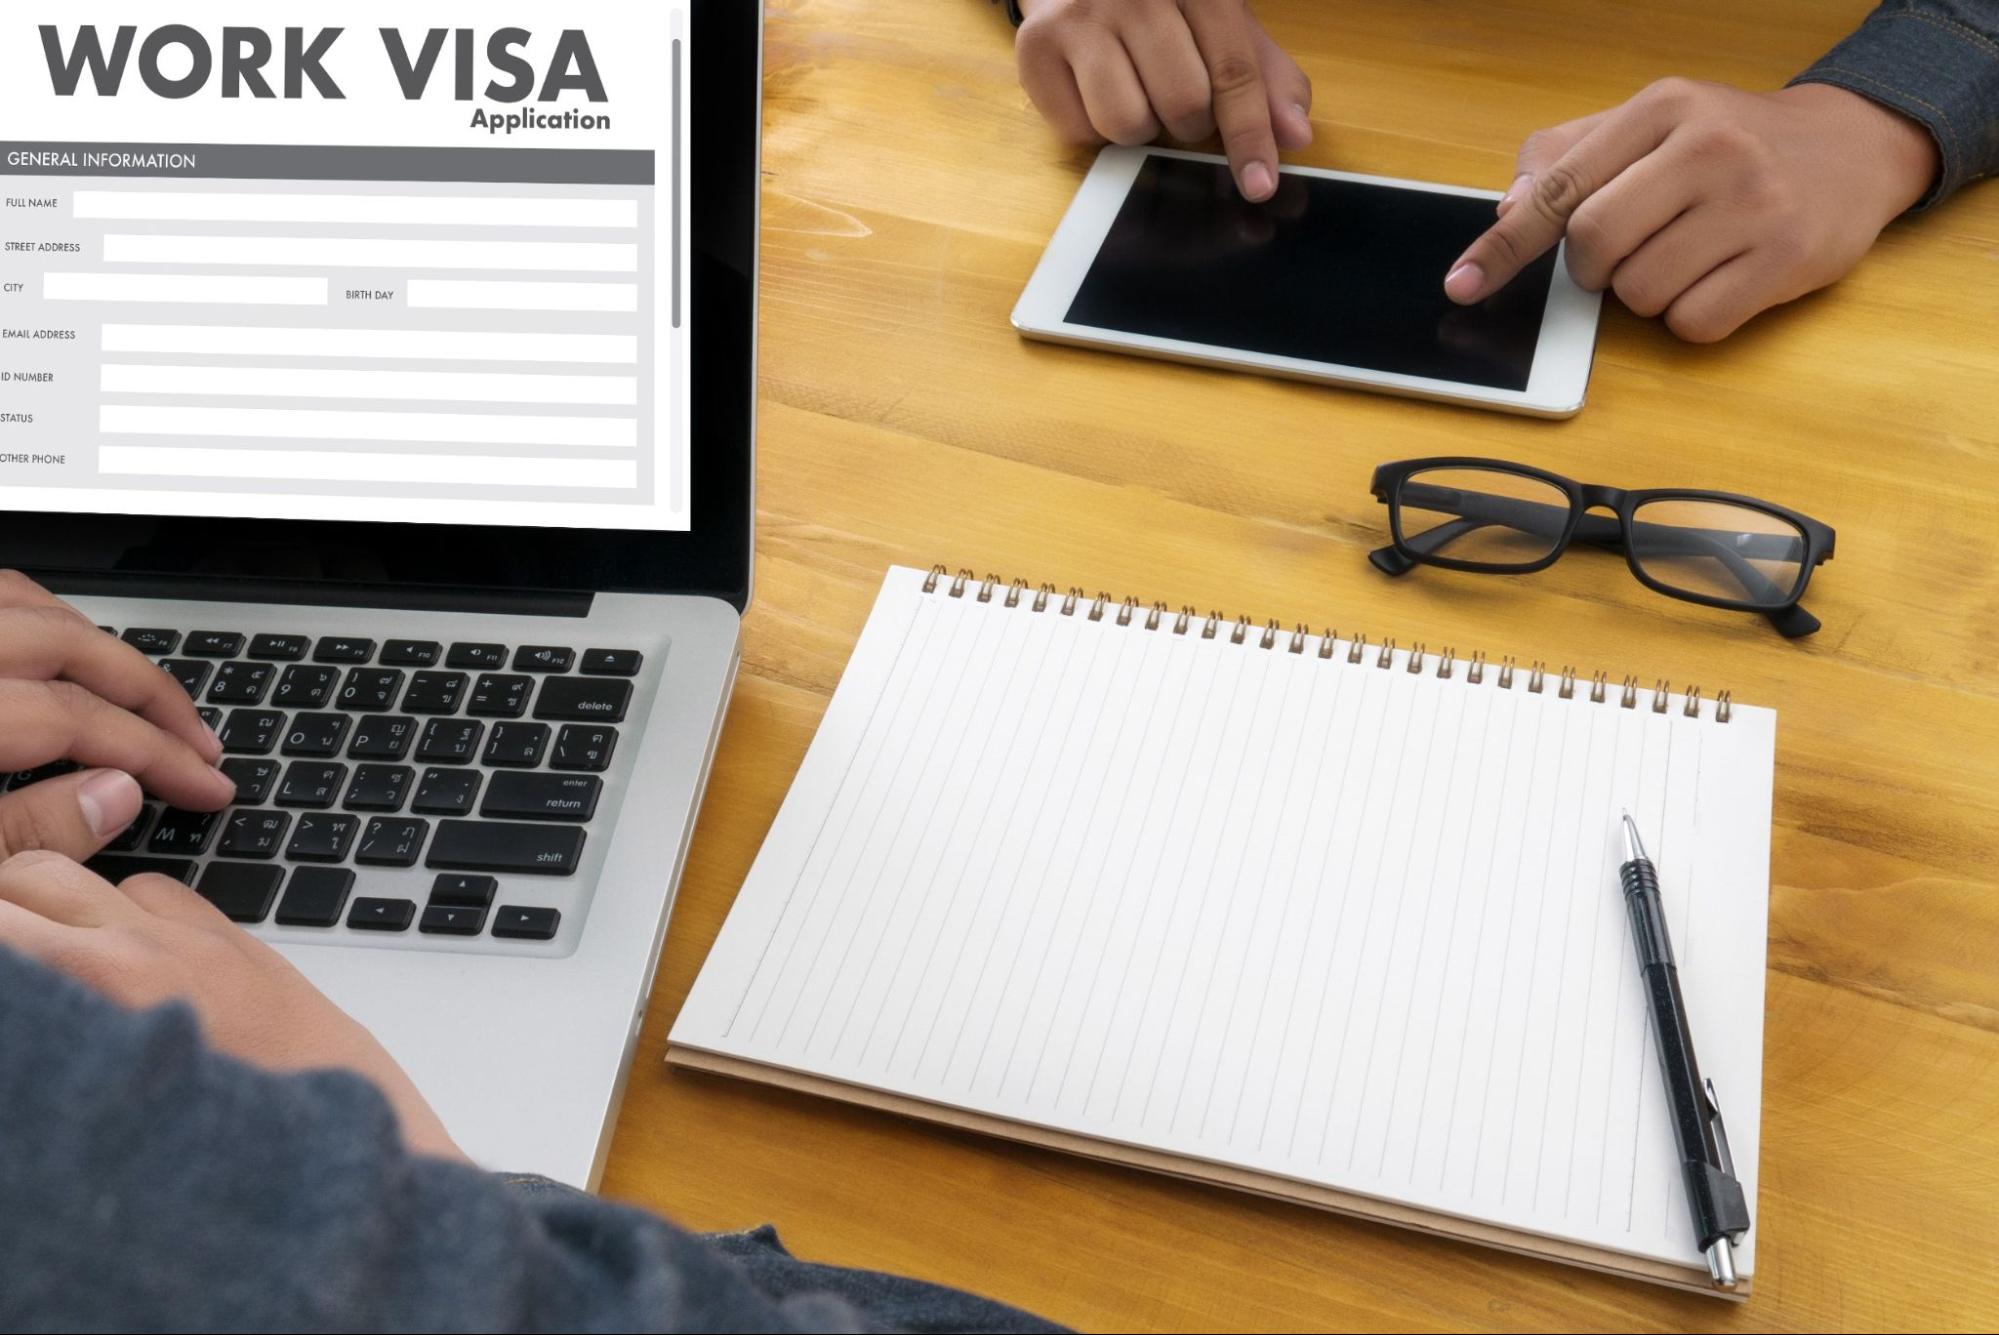 WORK Visa Application Employment Recruitment to Work businessman